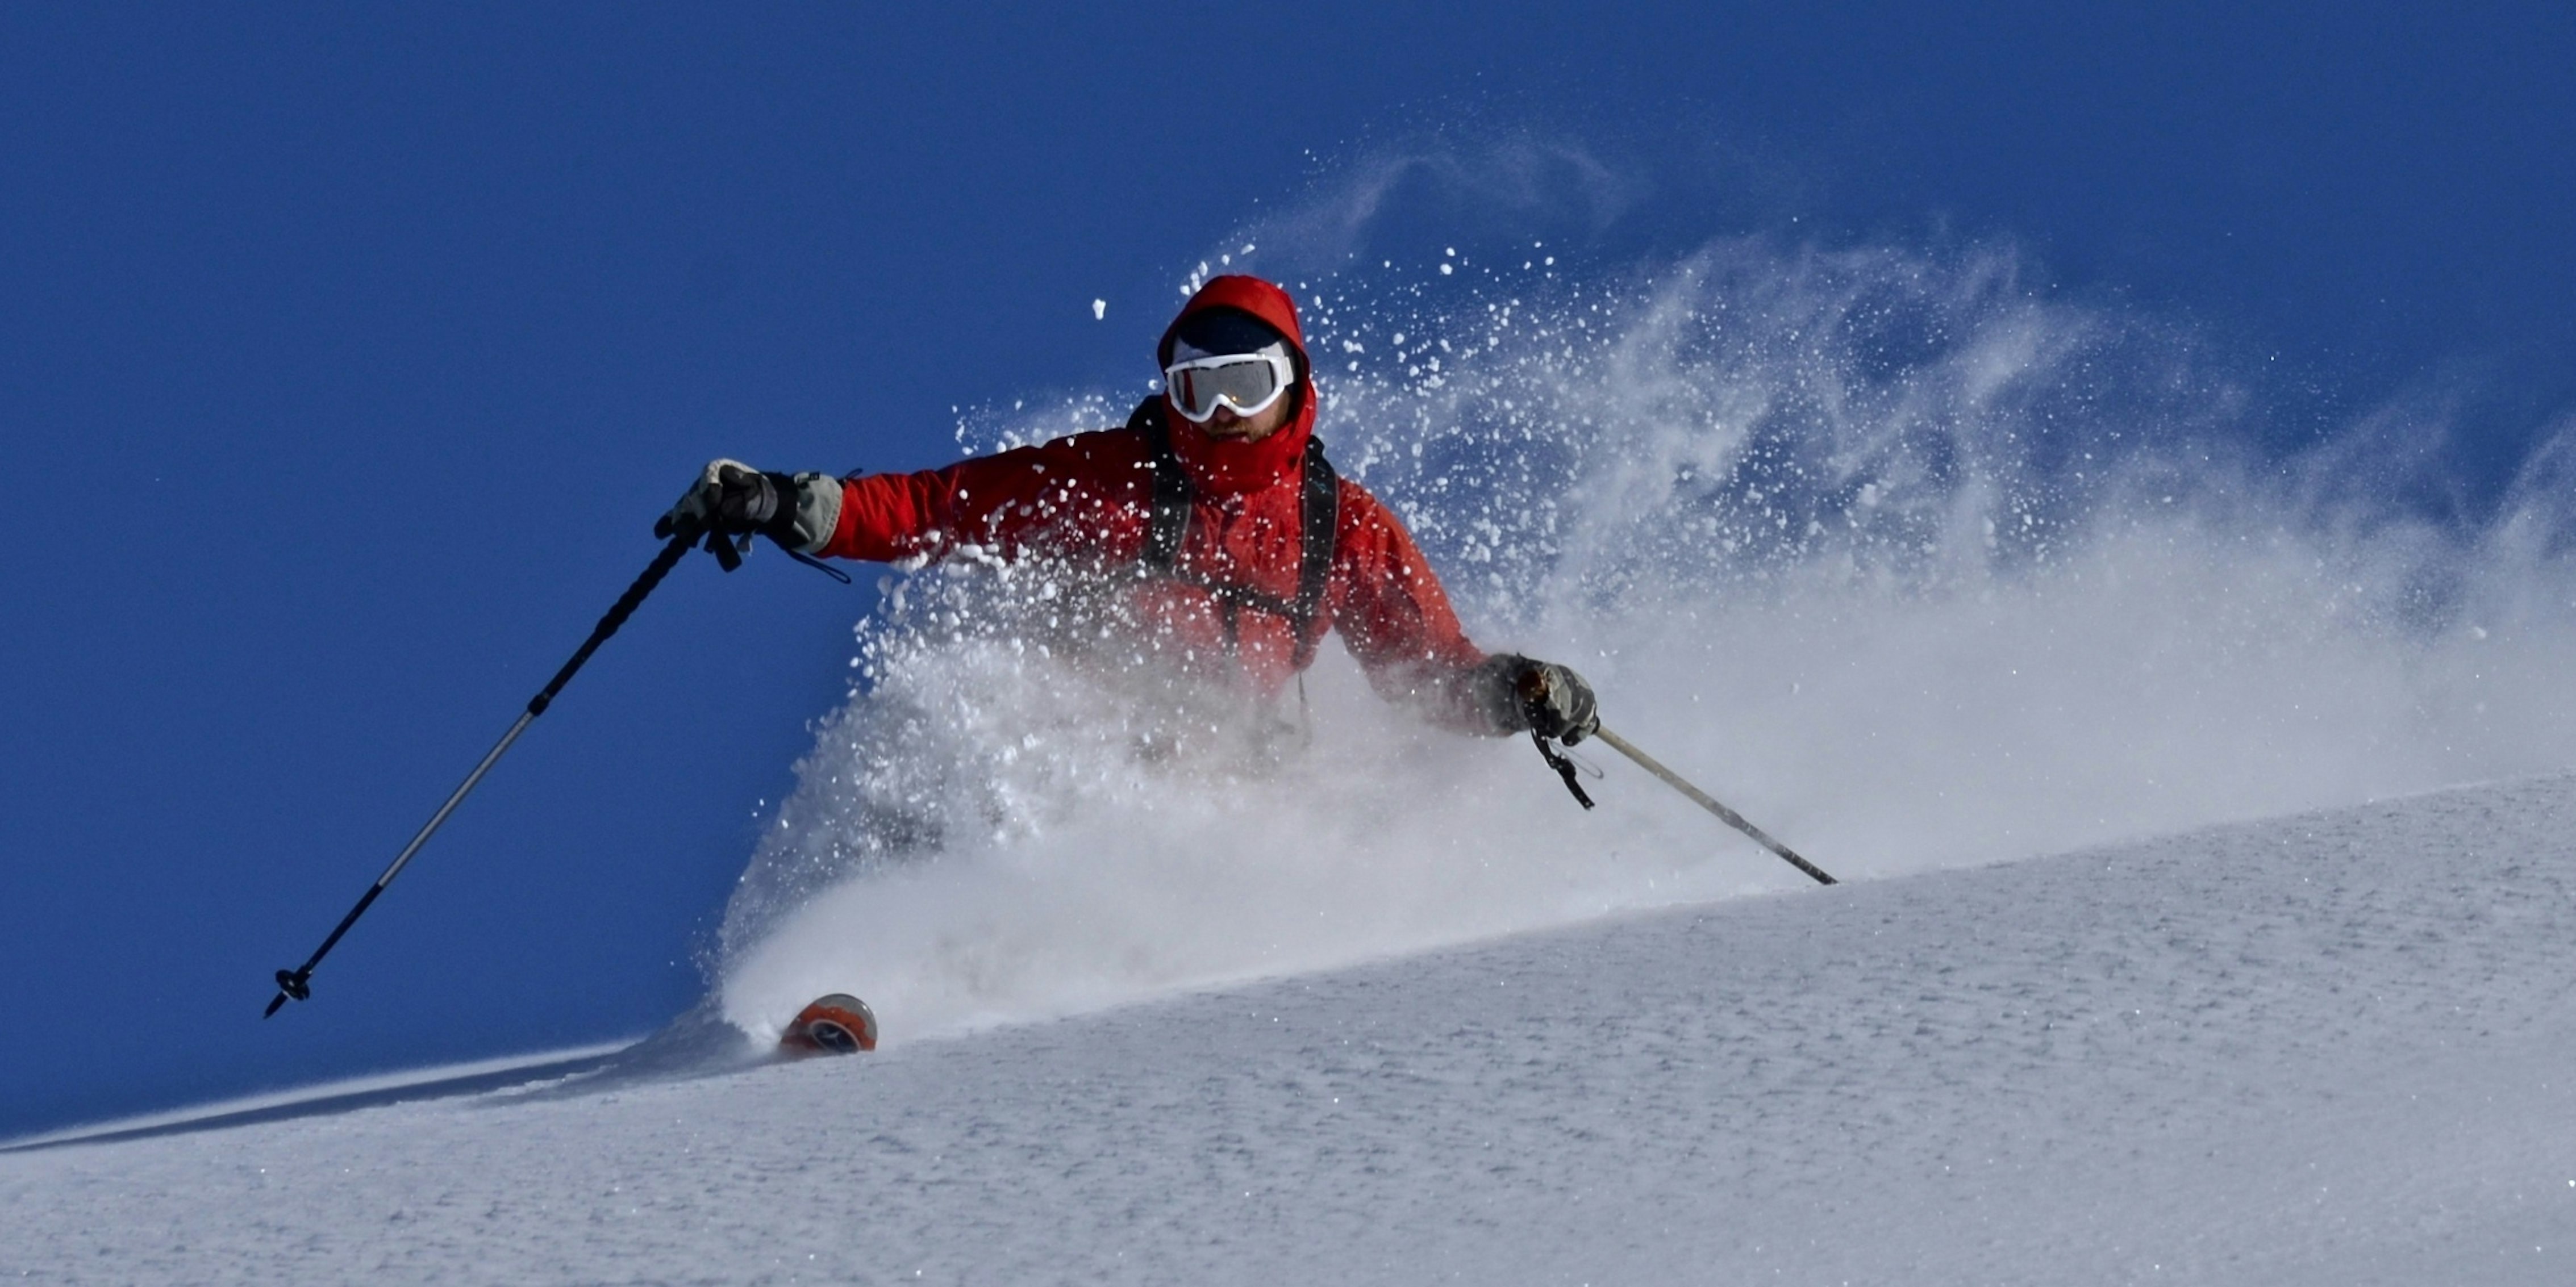 Play Skiing. Лыжный спорт журнал. Журнал лыжный спорт купить. Cold лыжи